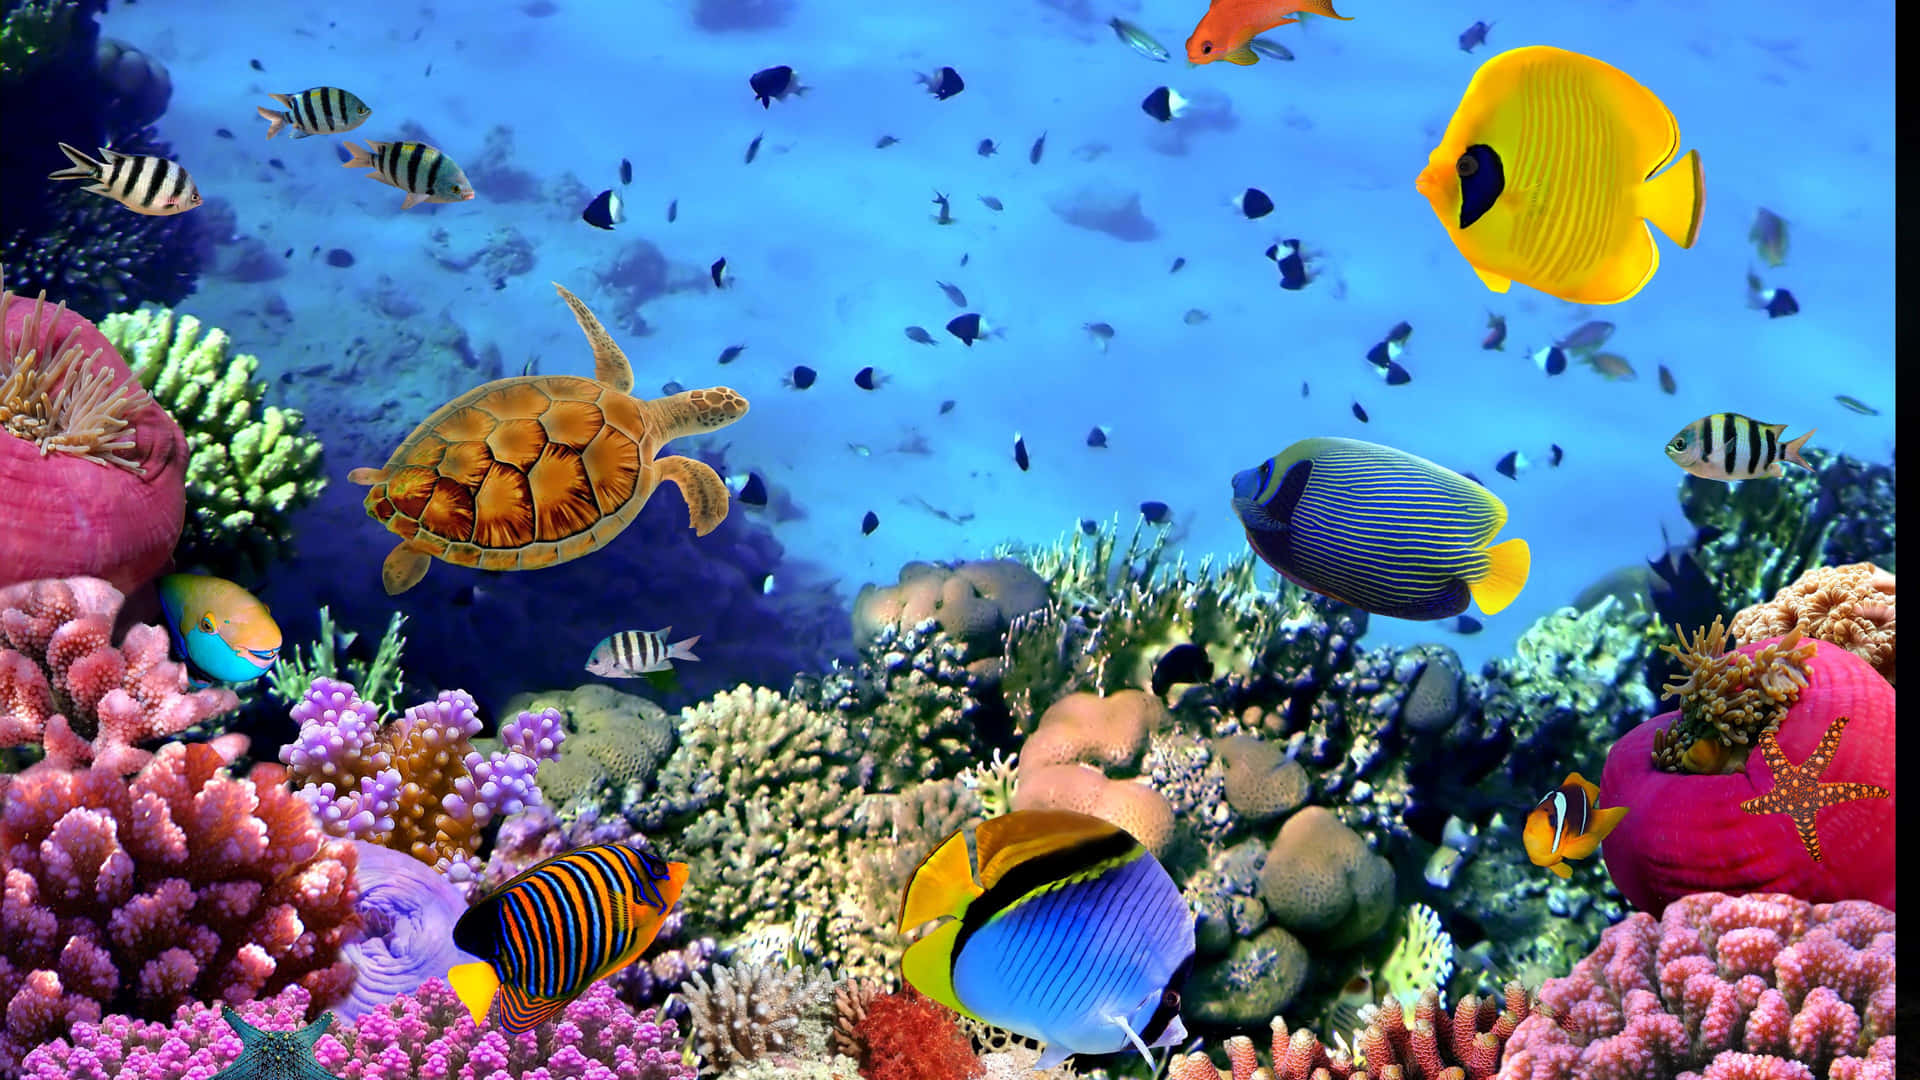 Aquarium 4K Live Wallpaper - Apps on Google Play